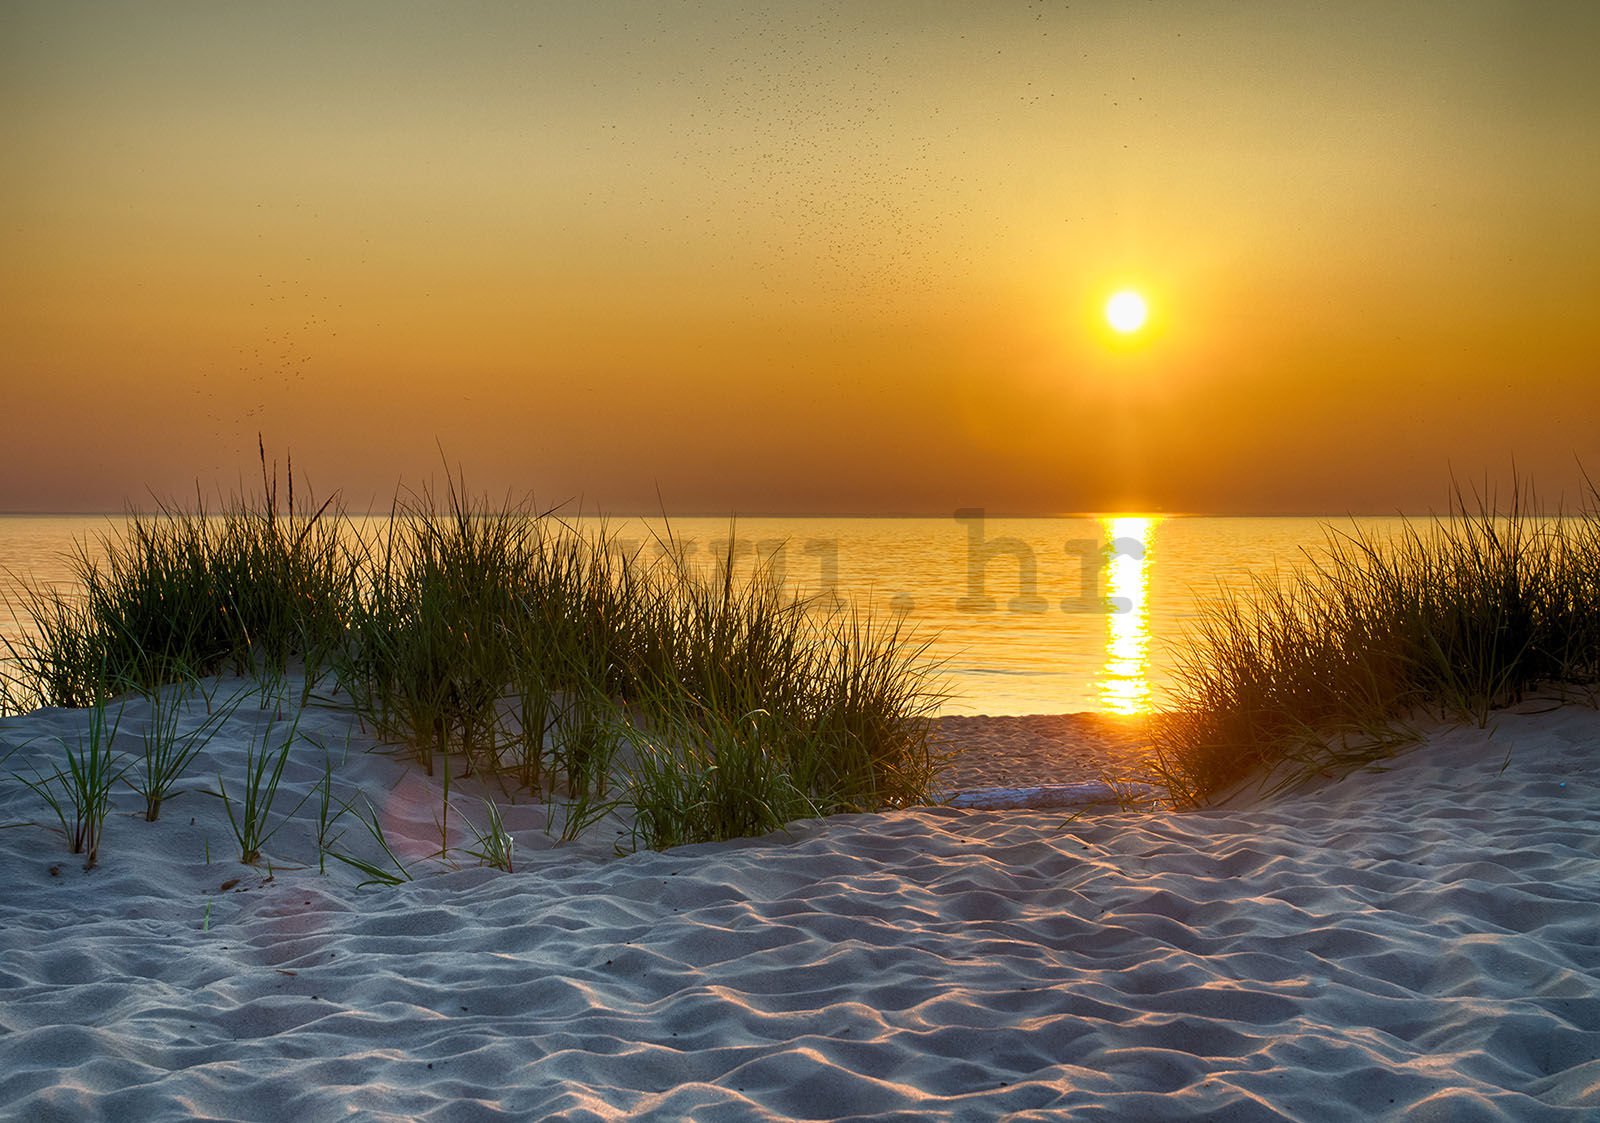 Vlies foto tapeta: Zalazak sunca na plaži (5) - 368x254 cm